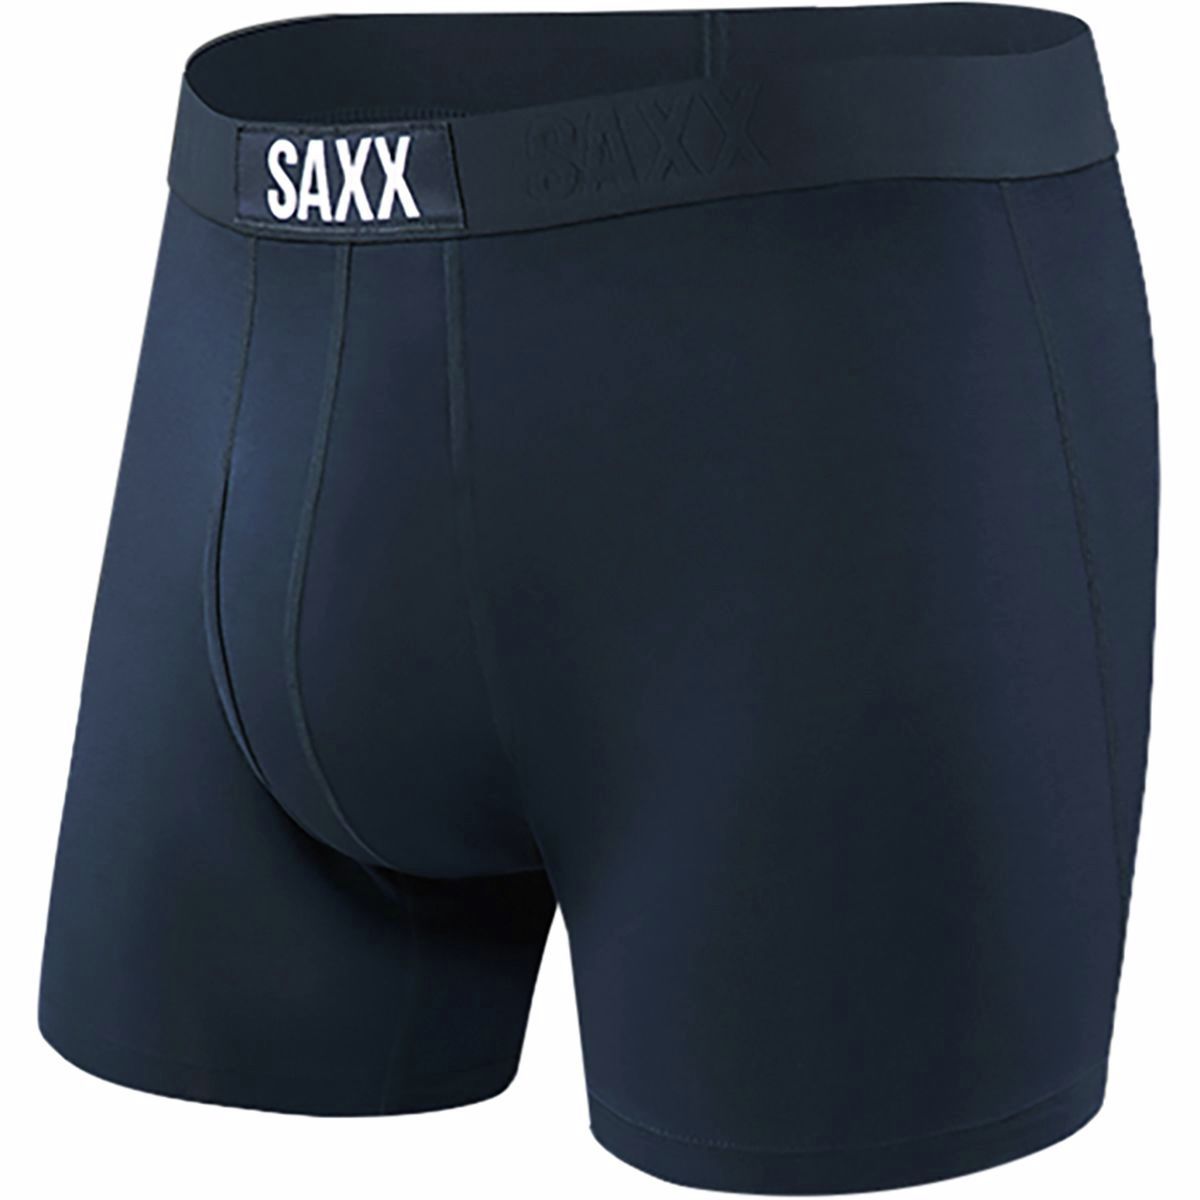 SAXX Ultra Boxer Brief Classic - 3-Pack - Men's - Men